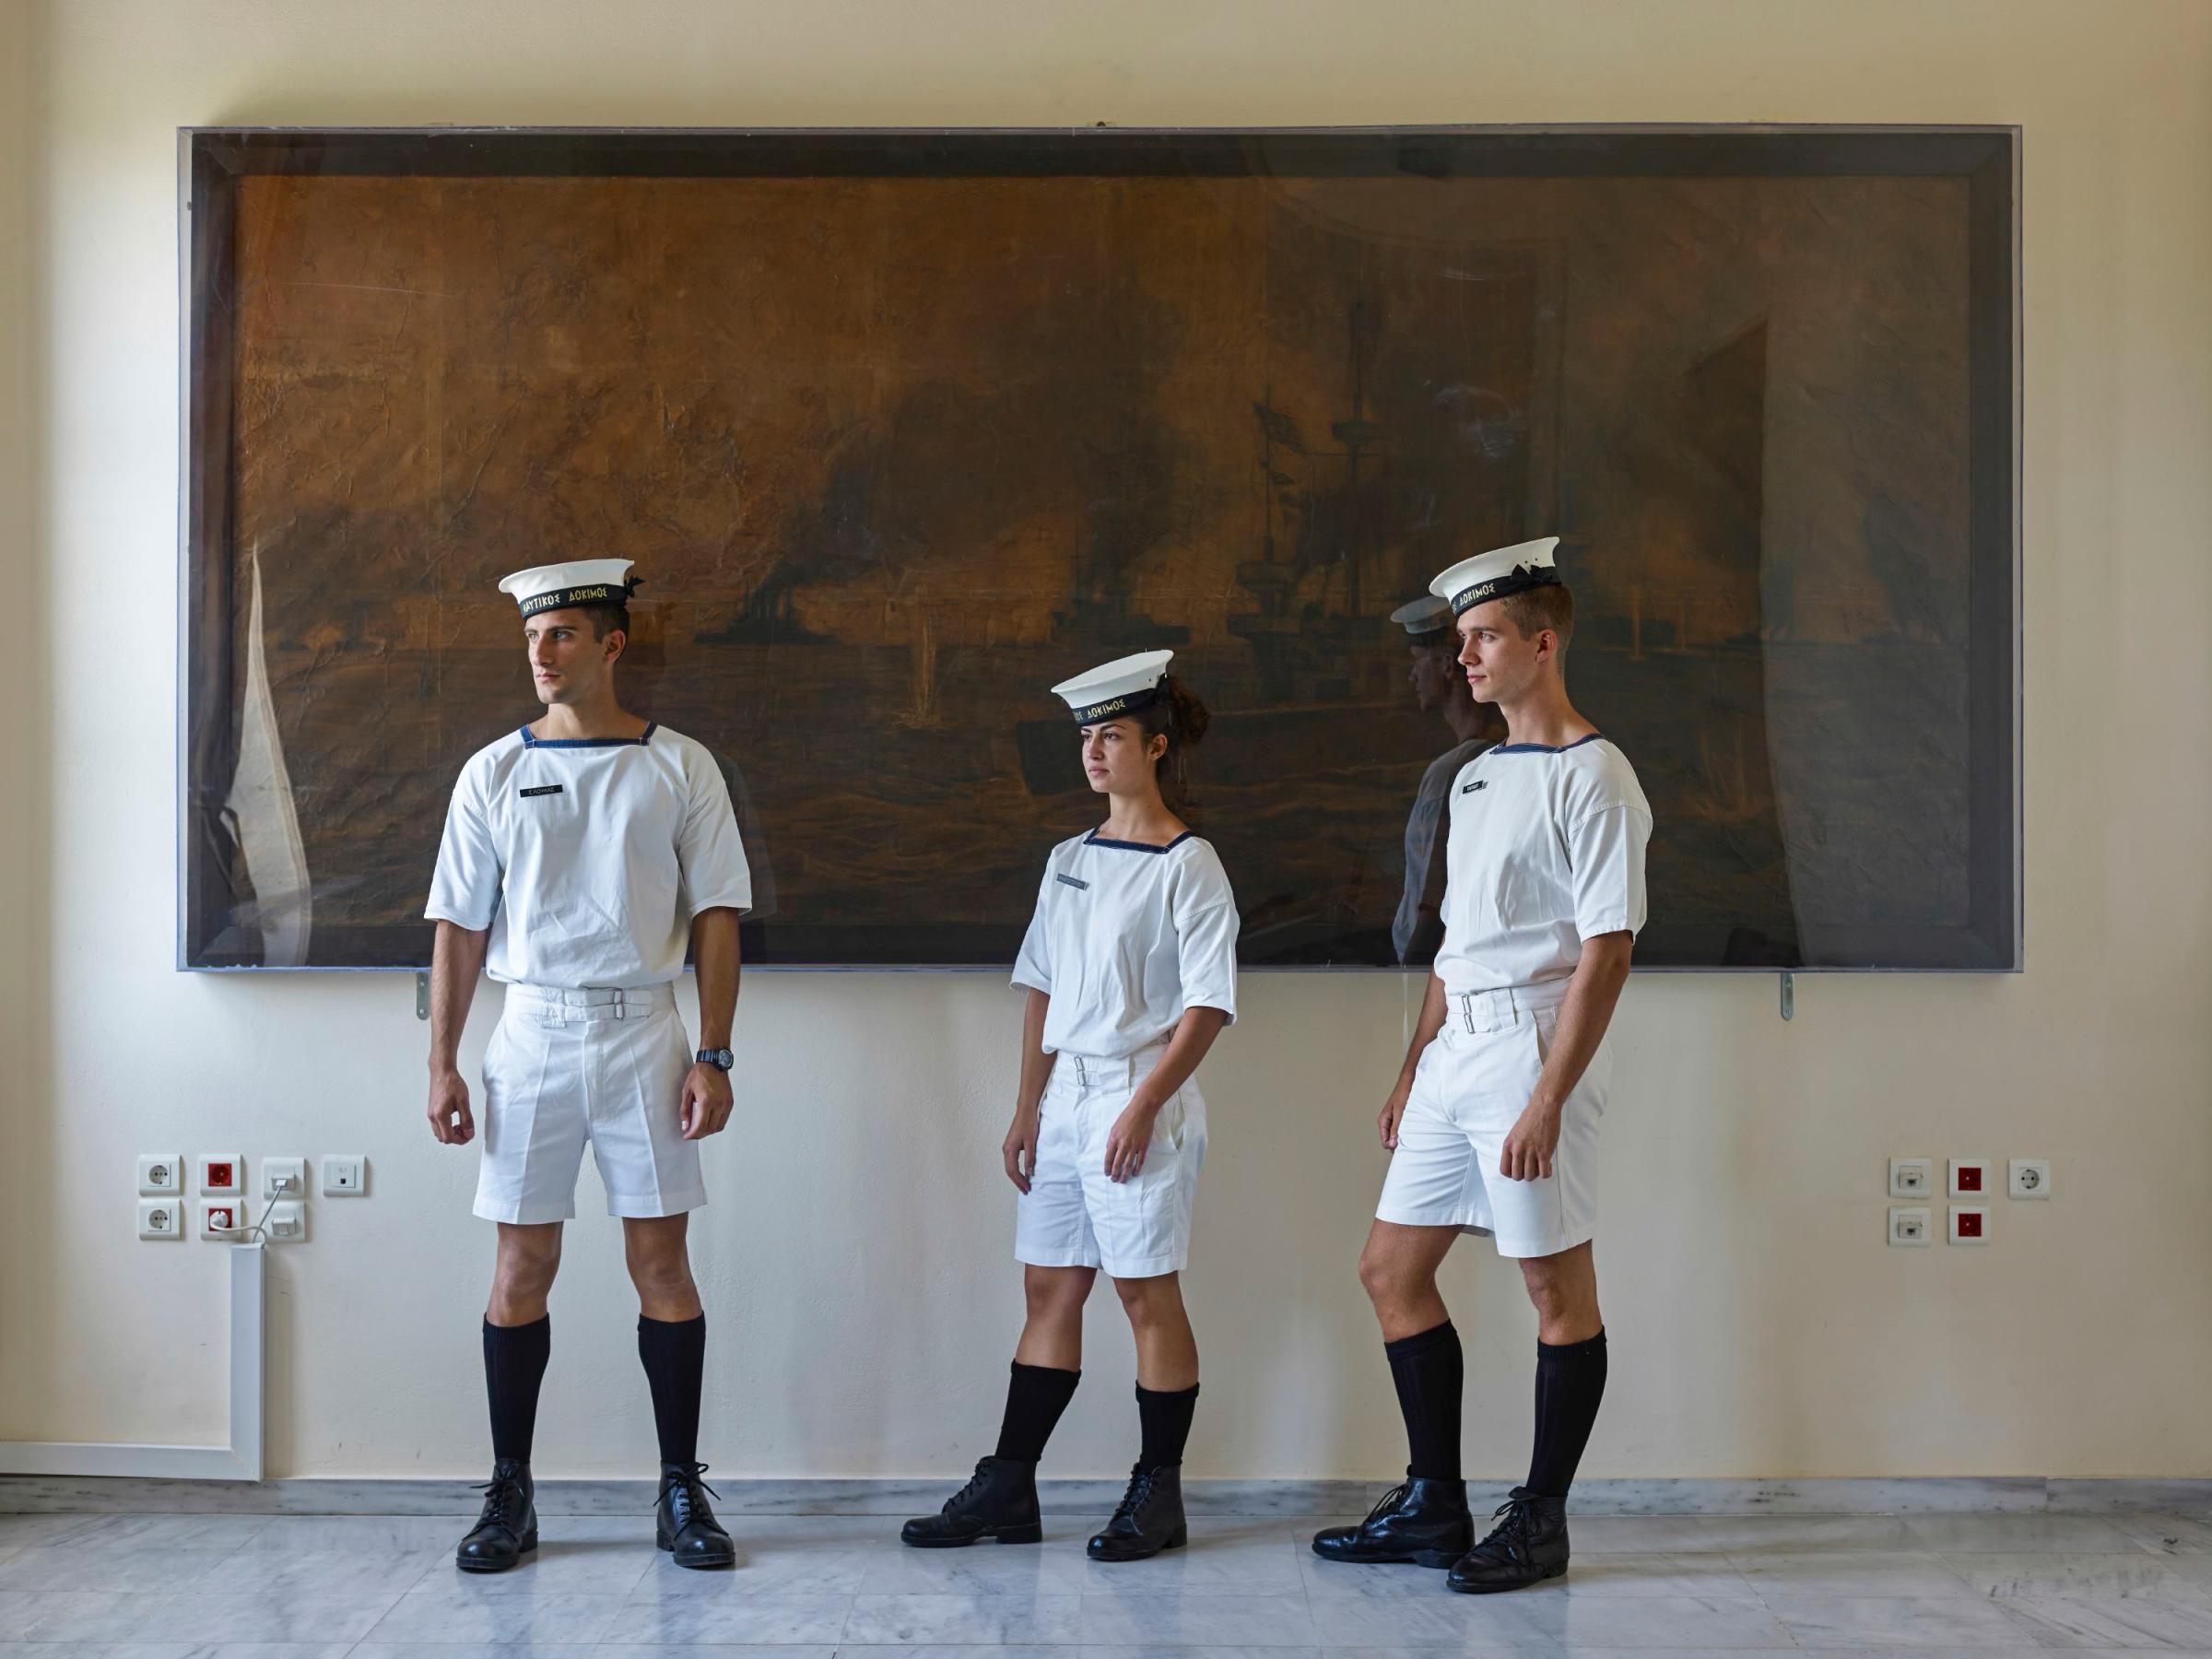 Cadets of the Hellenic Naval Academy, Piraeus, Greece, Oct. 9, 2013.